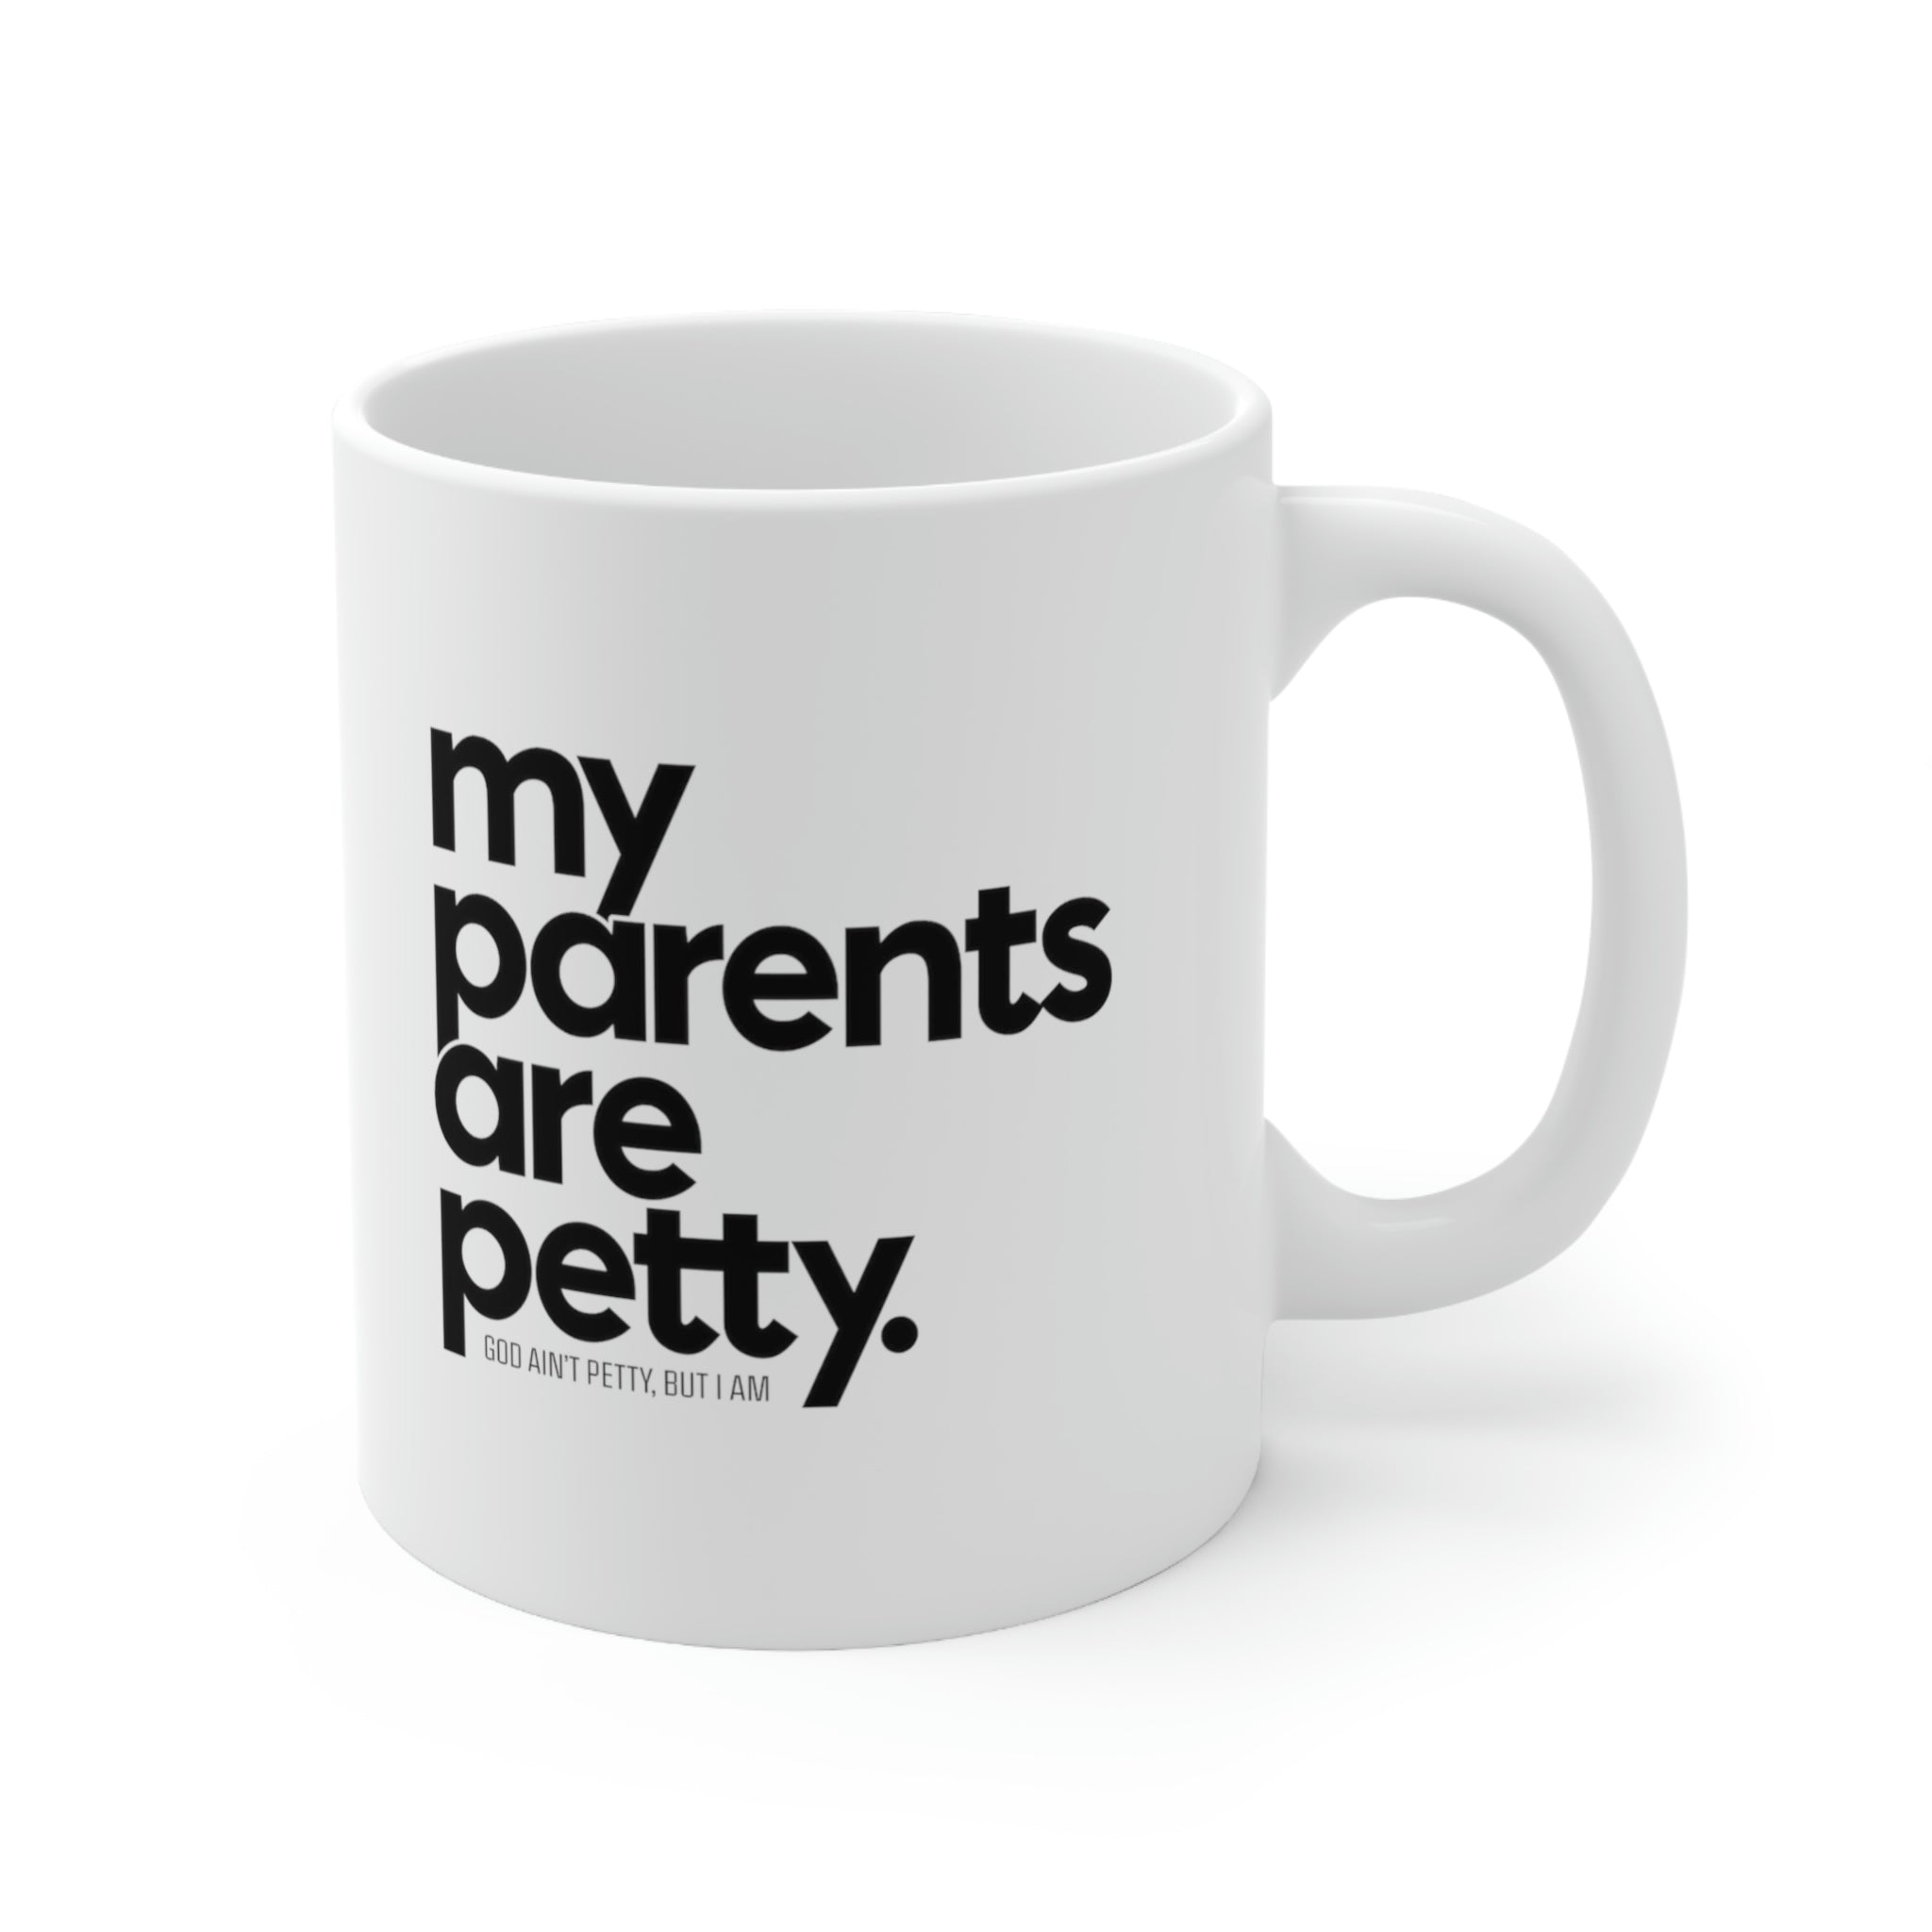 My parents are petty Mug 11oz (White/Black)-Mug-The Original God Ain't Petty But I Am